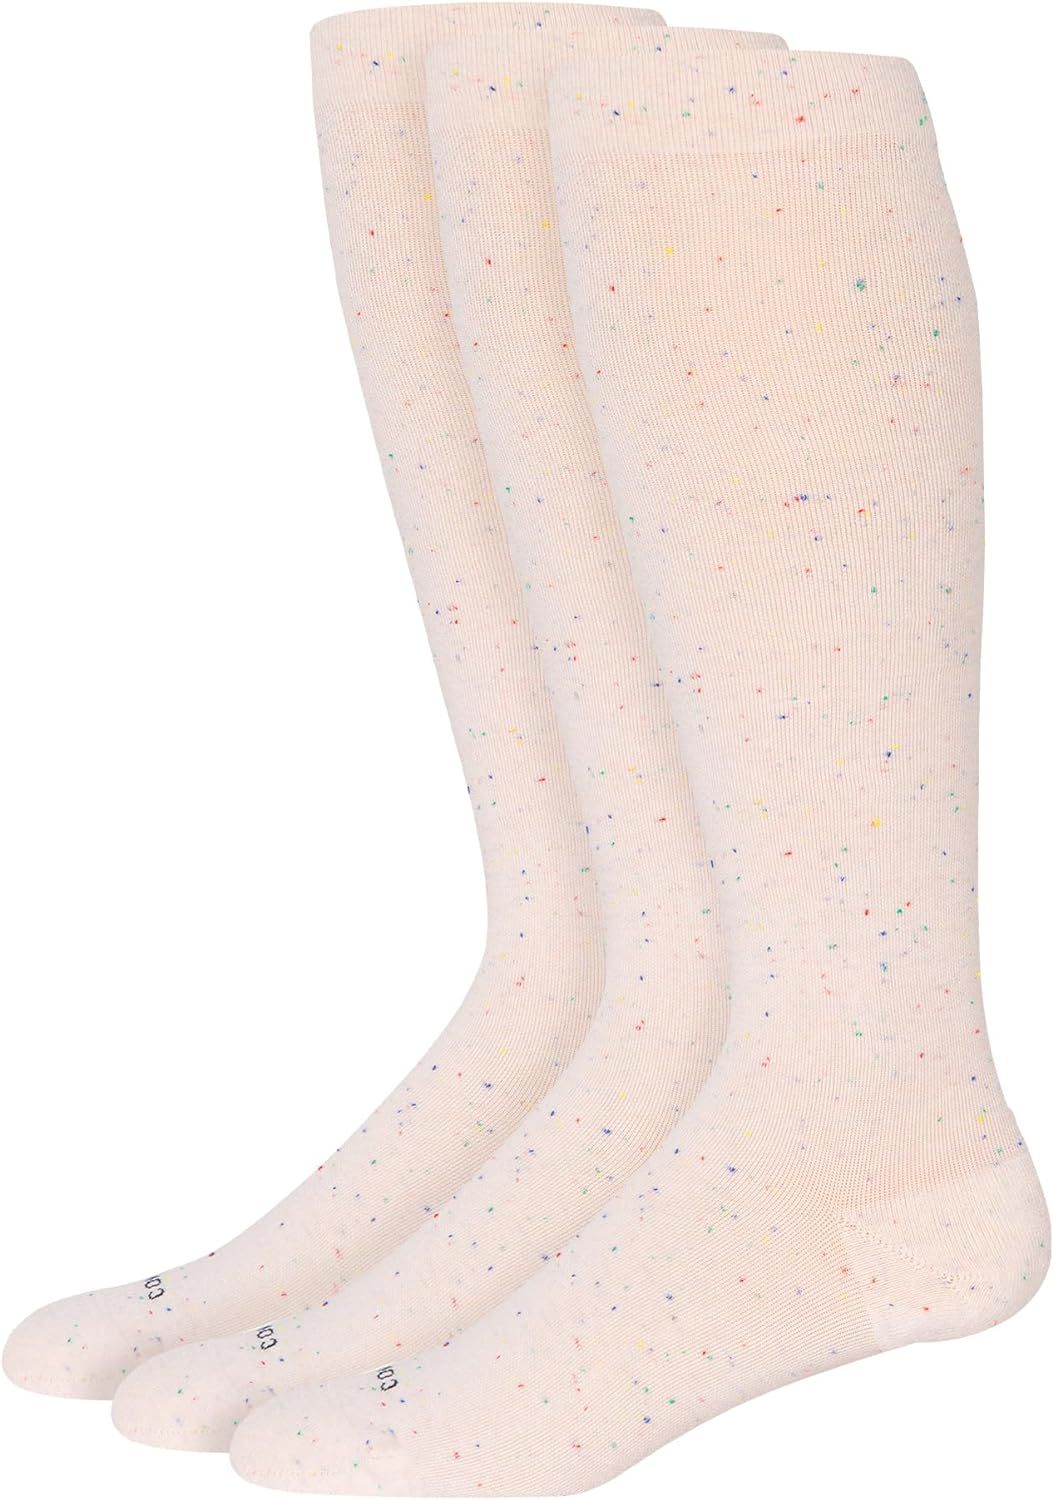 Comrad Recycled Cotton Knee High Socks - 15-20mmHg Graduated Compression Socks - Soft & Breathabl... | Amazon (US)